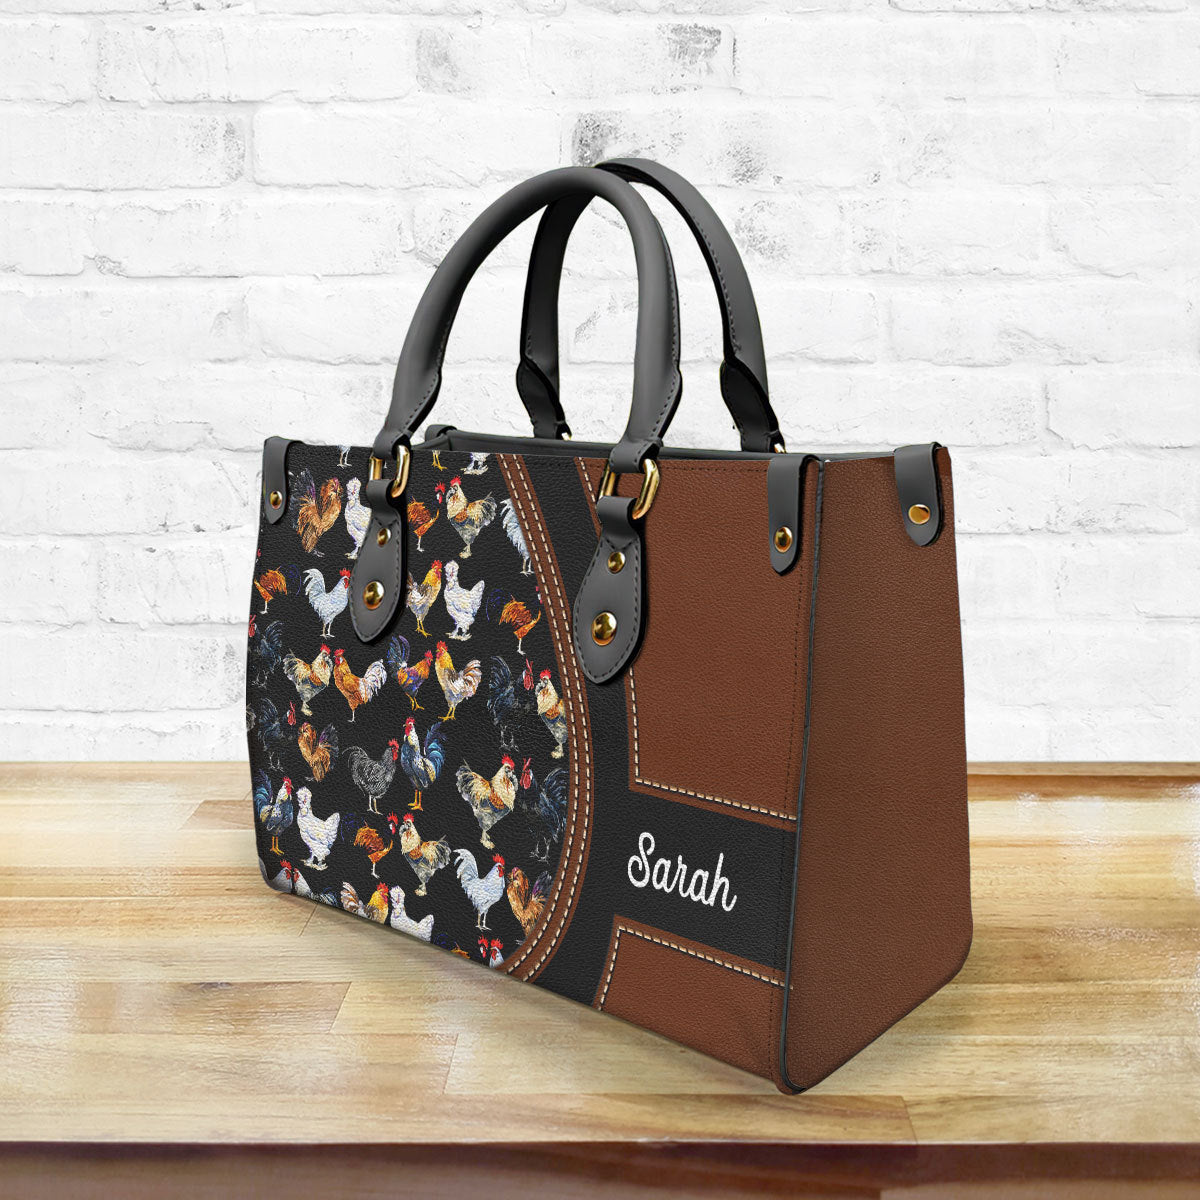 Custom Chicken Leather Handbag Purse With Chicken Breeds